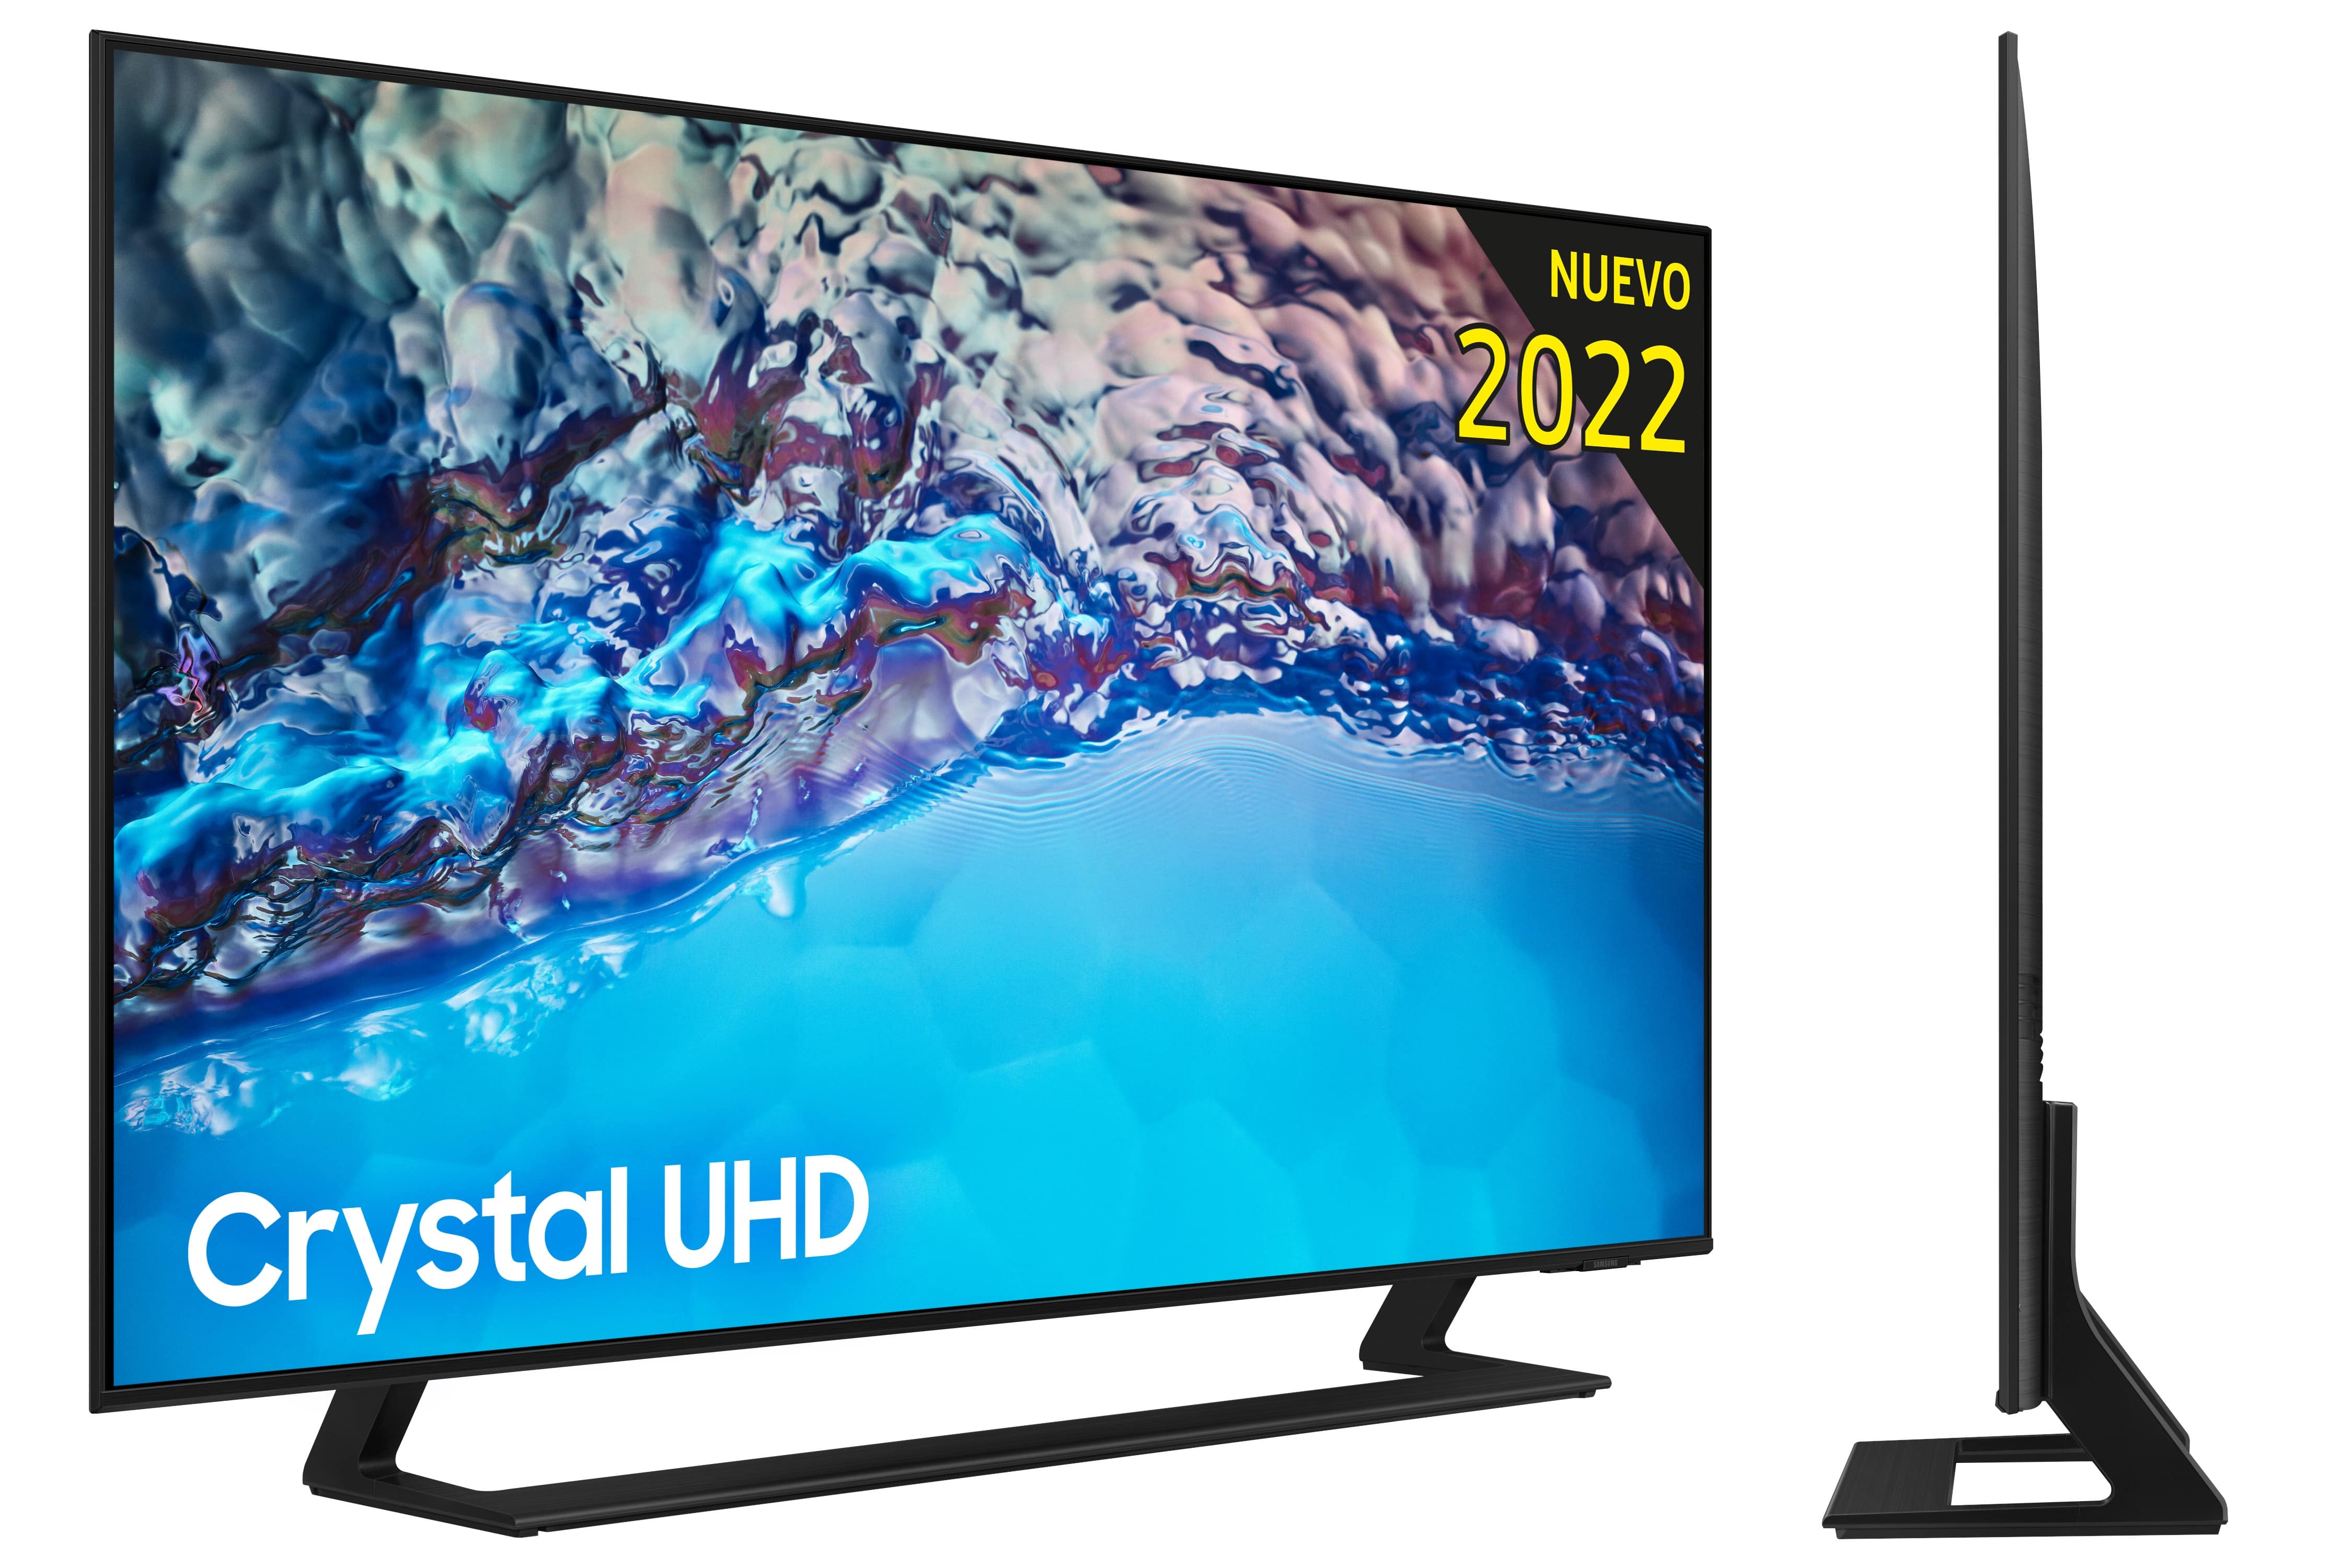 Samsung TV BU8500 Crystal UHD 108cm 43" Smart TV (2022) - Black, Black - Negro